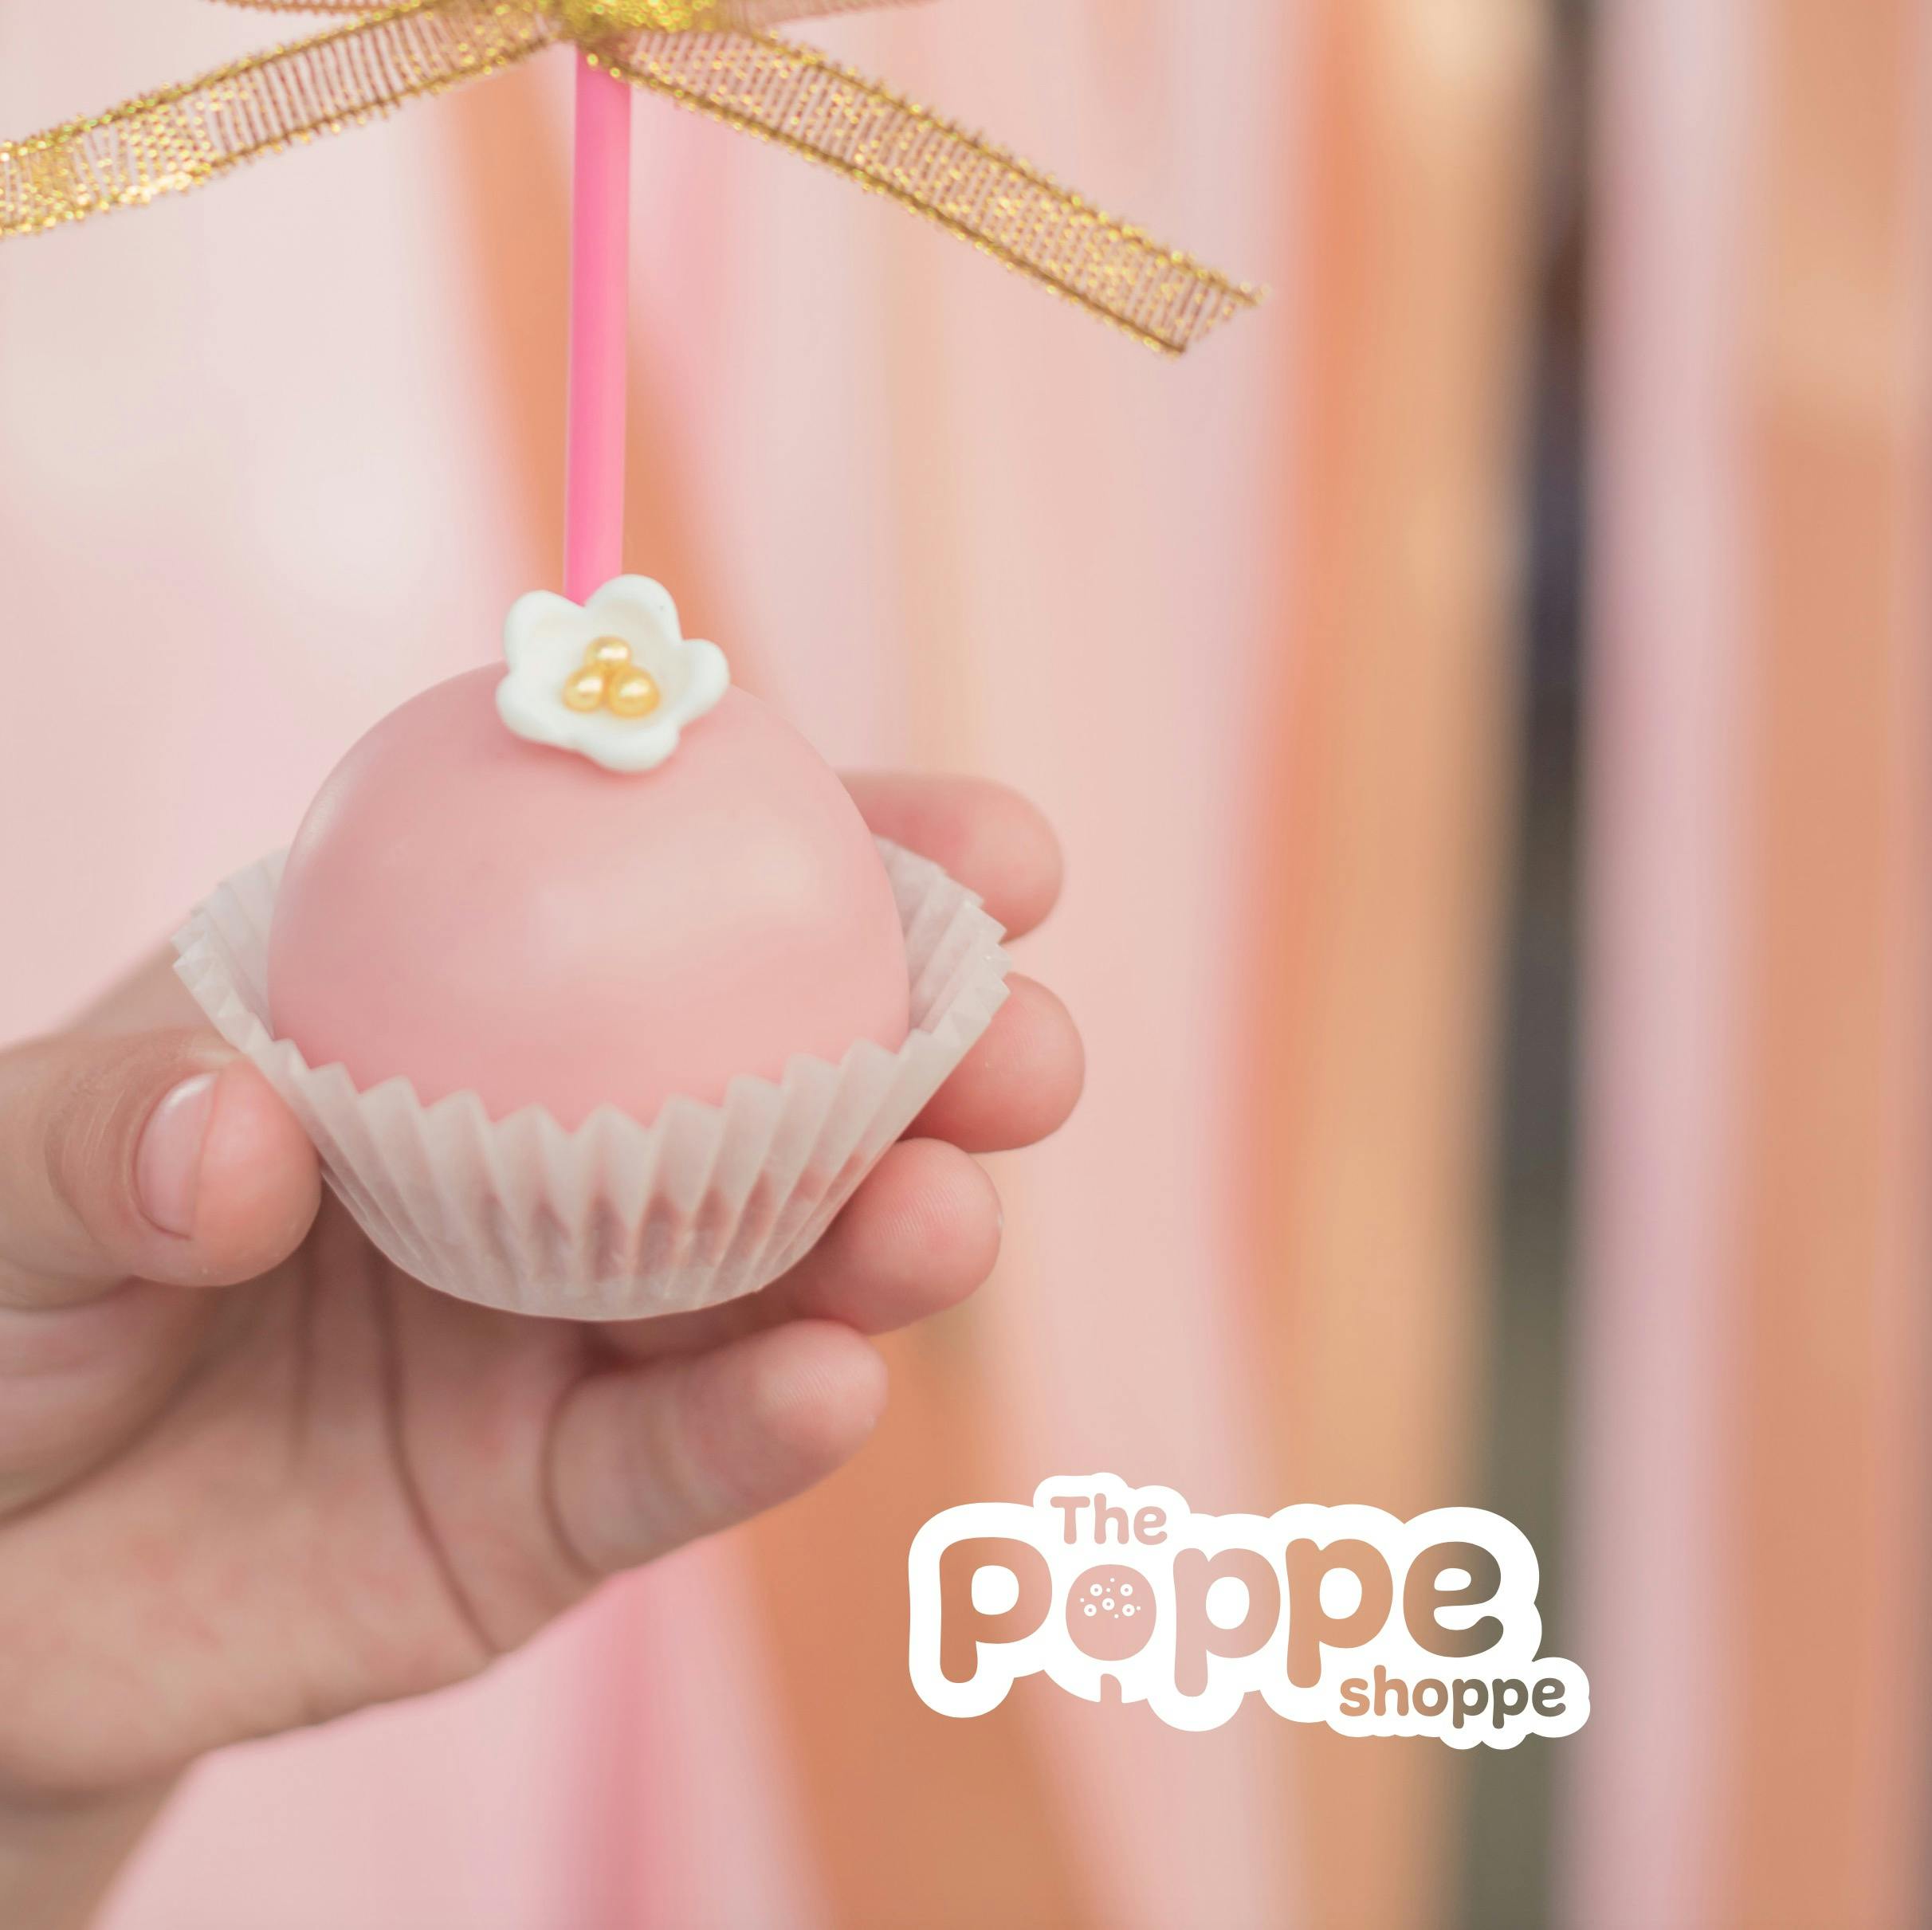 The Poppe Shoppe logo overlayed on a backdrop of a cake pop.